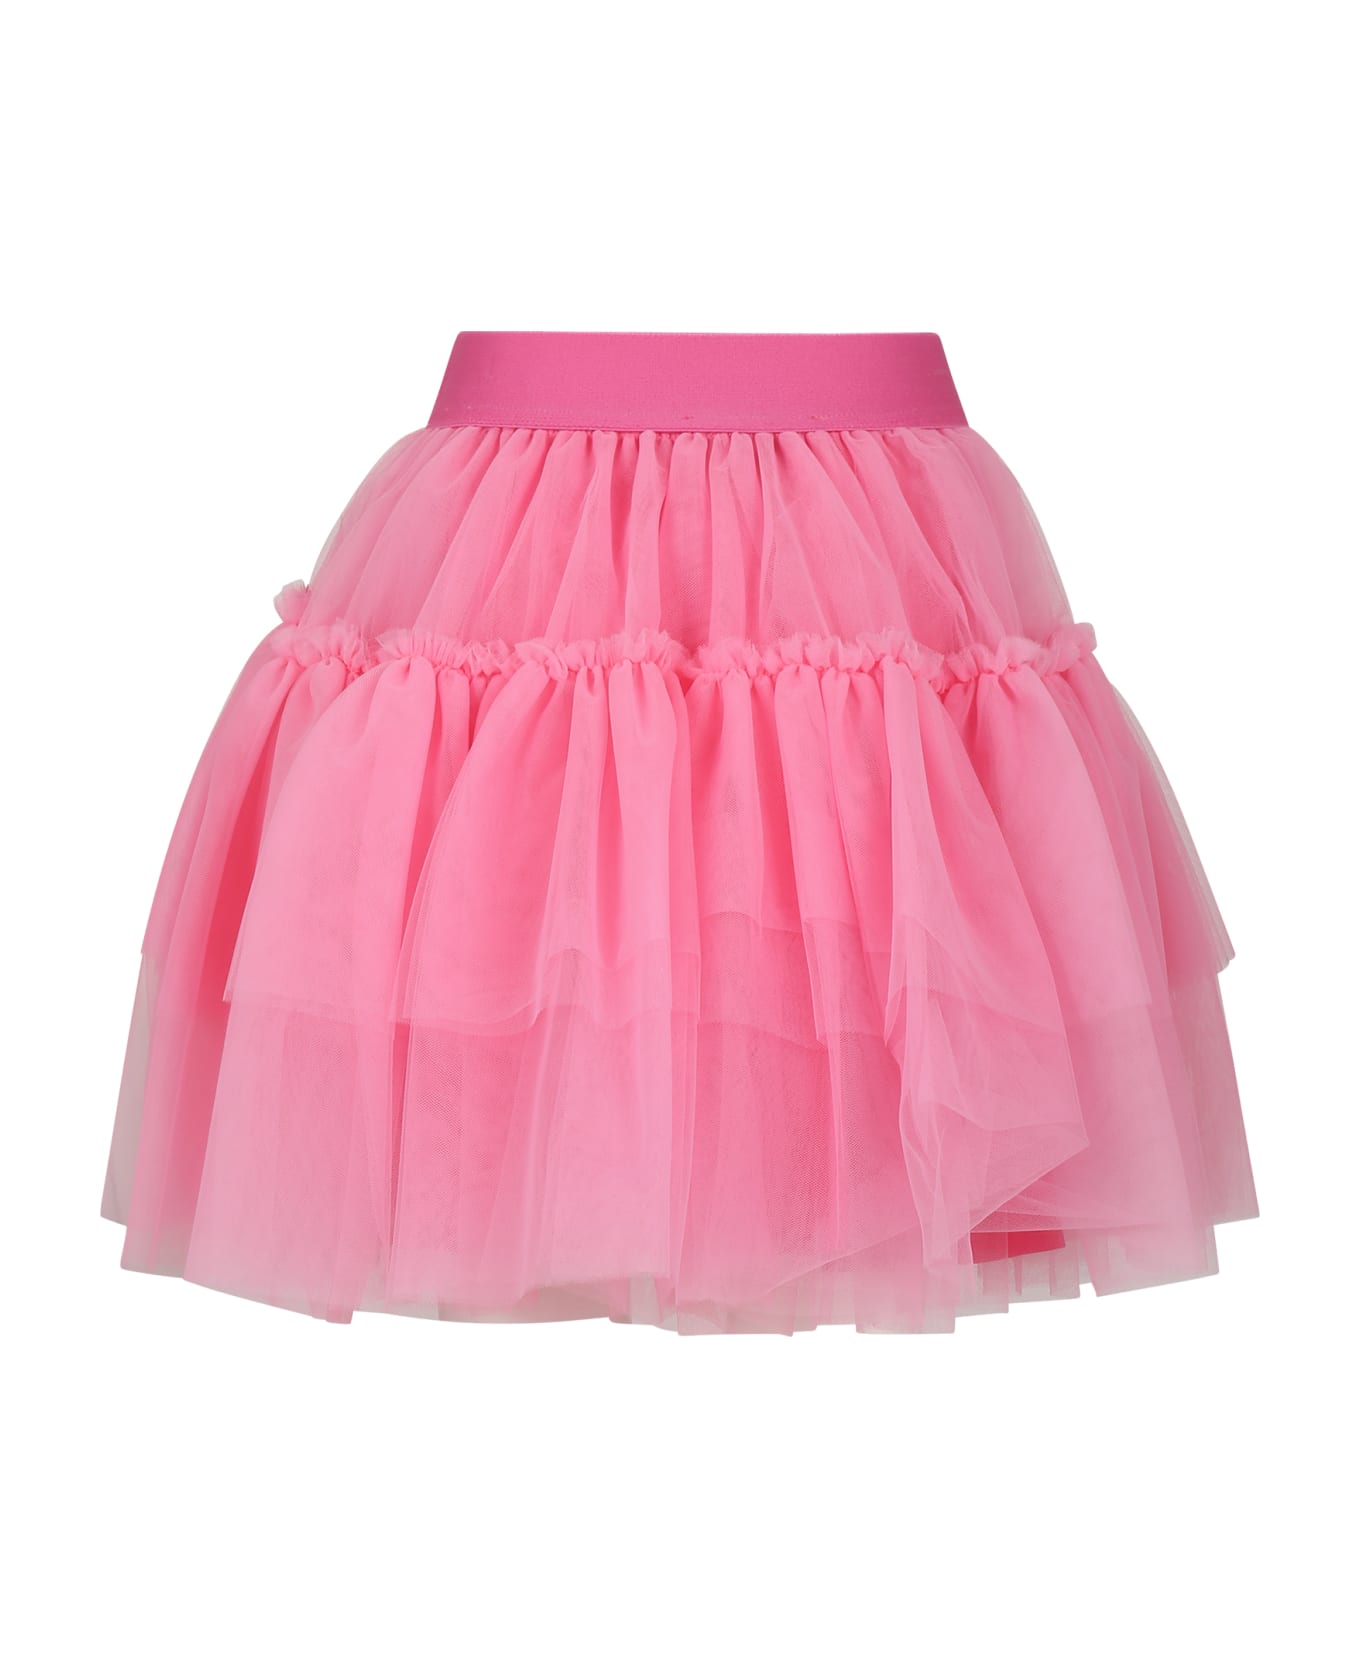 Monnalisa Pink Skirt For Girl With Writing - Pink